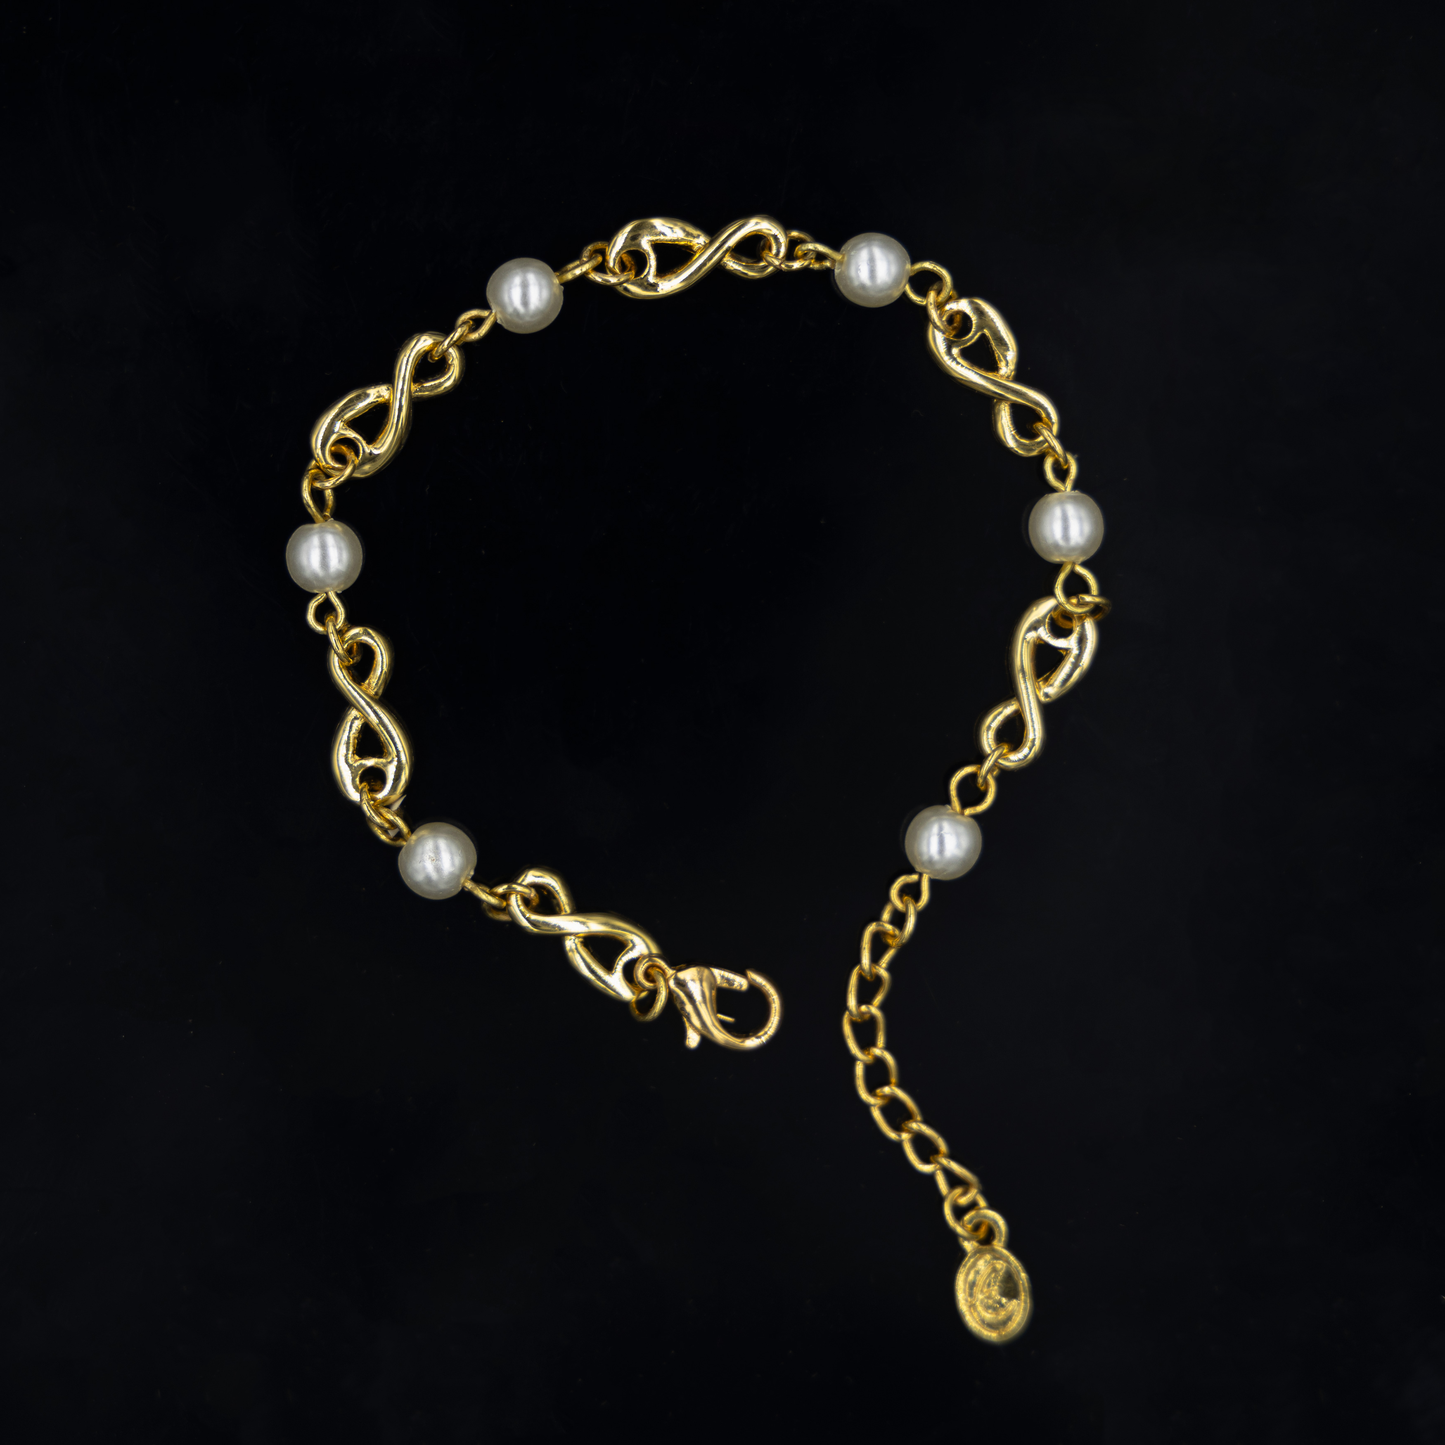 Everglow Infinity Bracelet